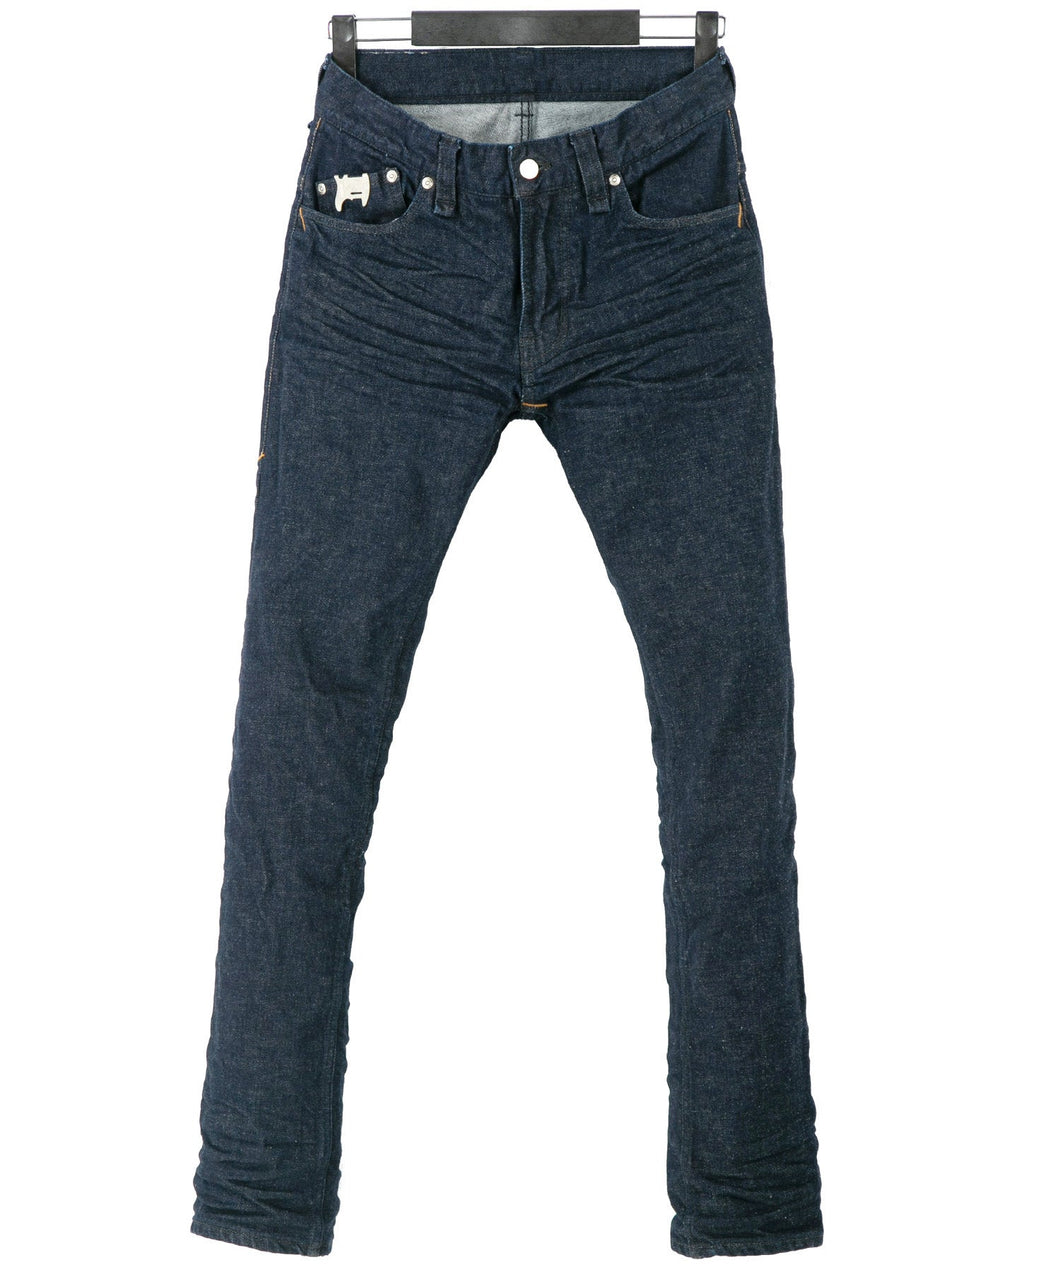 12.5oz Organic Cotton Stretch Denim Tight Straight Jeans - INDIGO